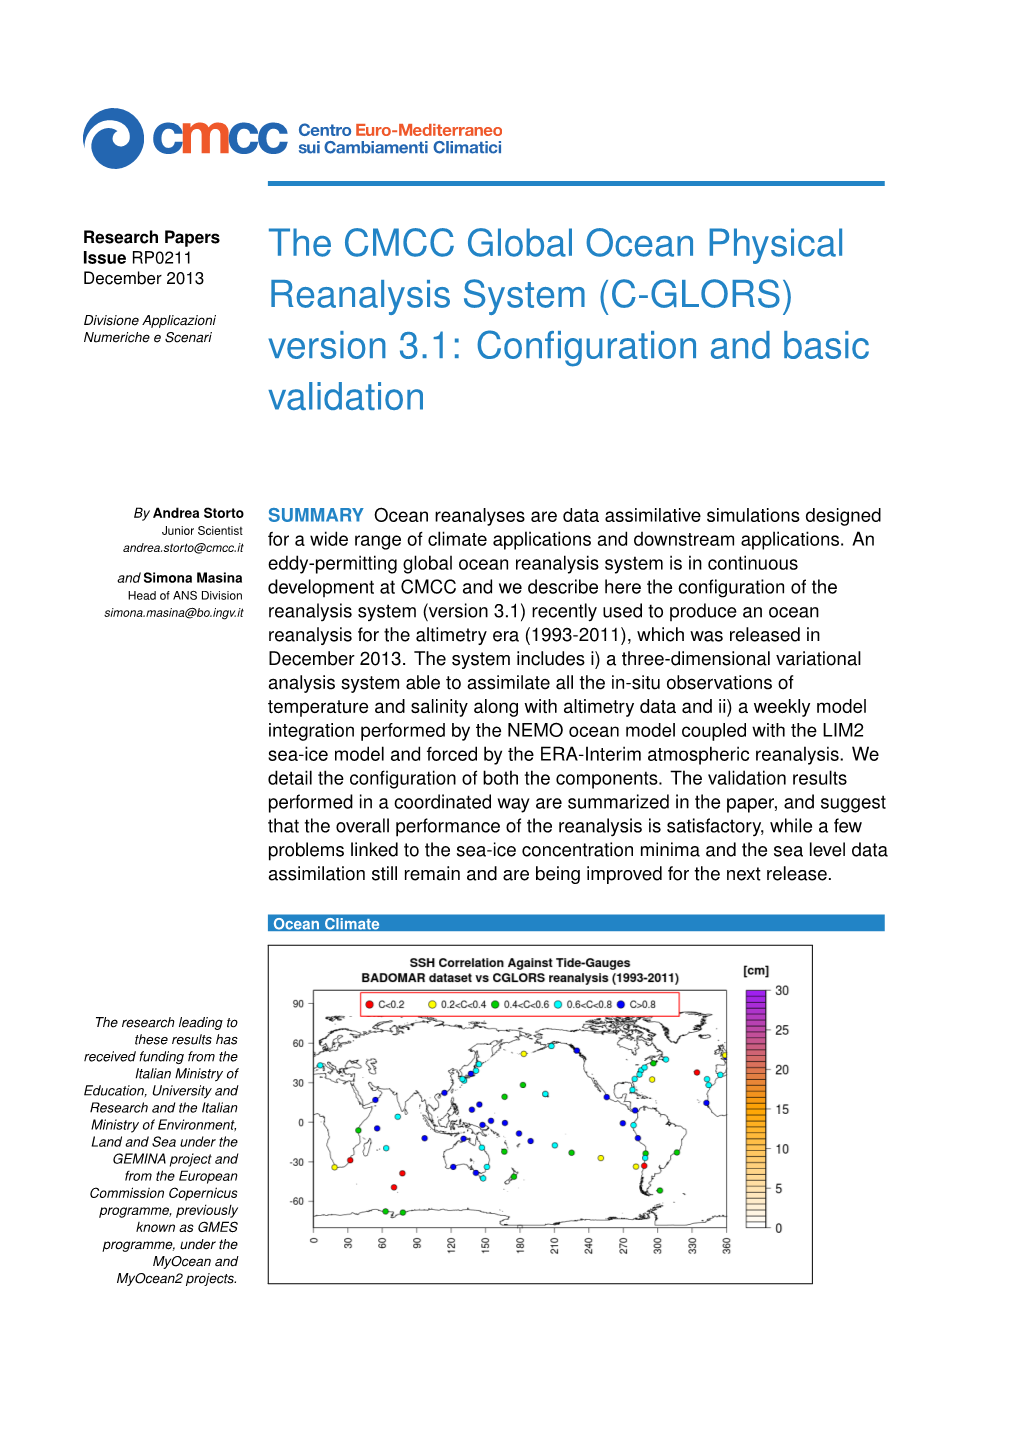 The CMCC Global Ocean Physical Reanalysis System (C-GLORS